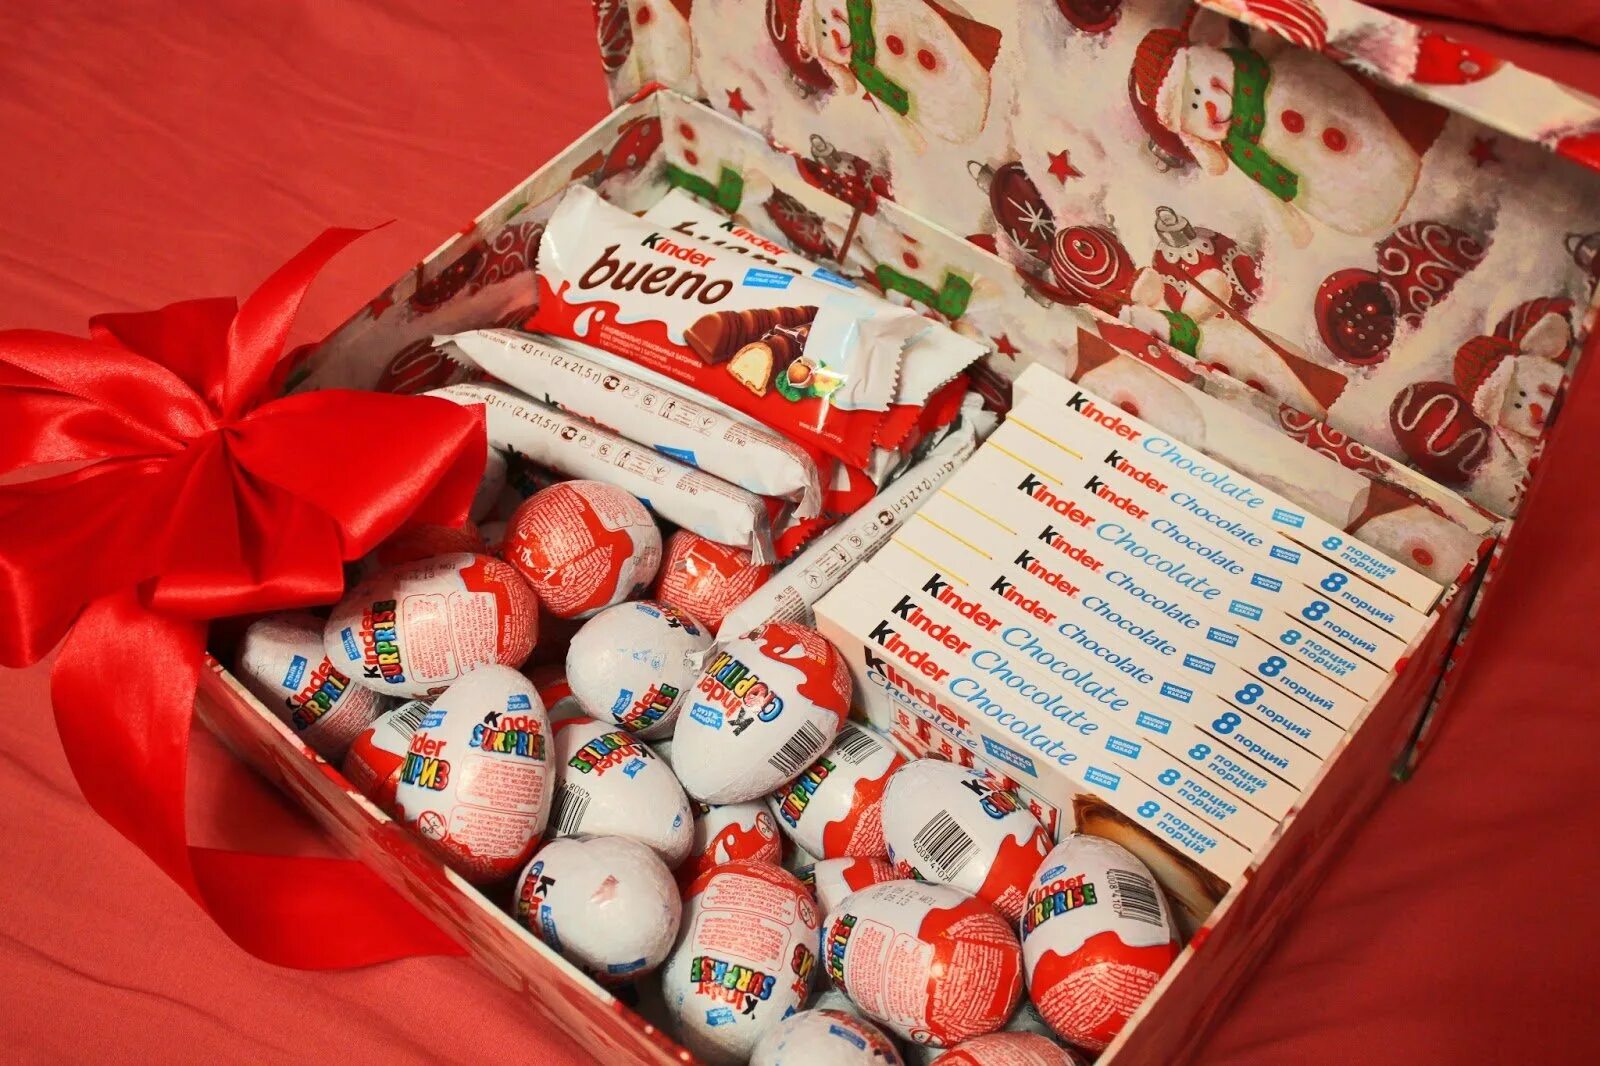 Сюрпризы сценарий. Коробка со сладостями. Коробочка со сладостями. Коробка киндеров. Подарочные коробки со сладостями.